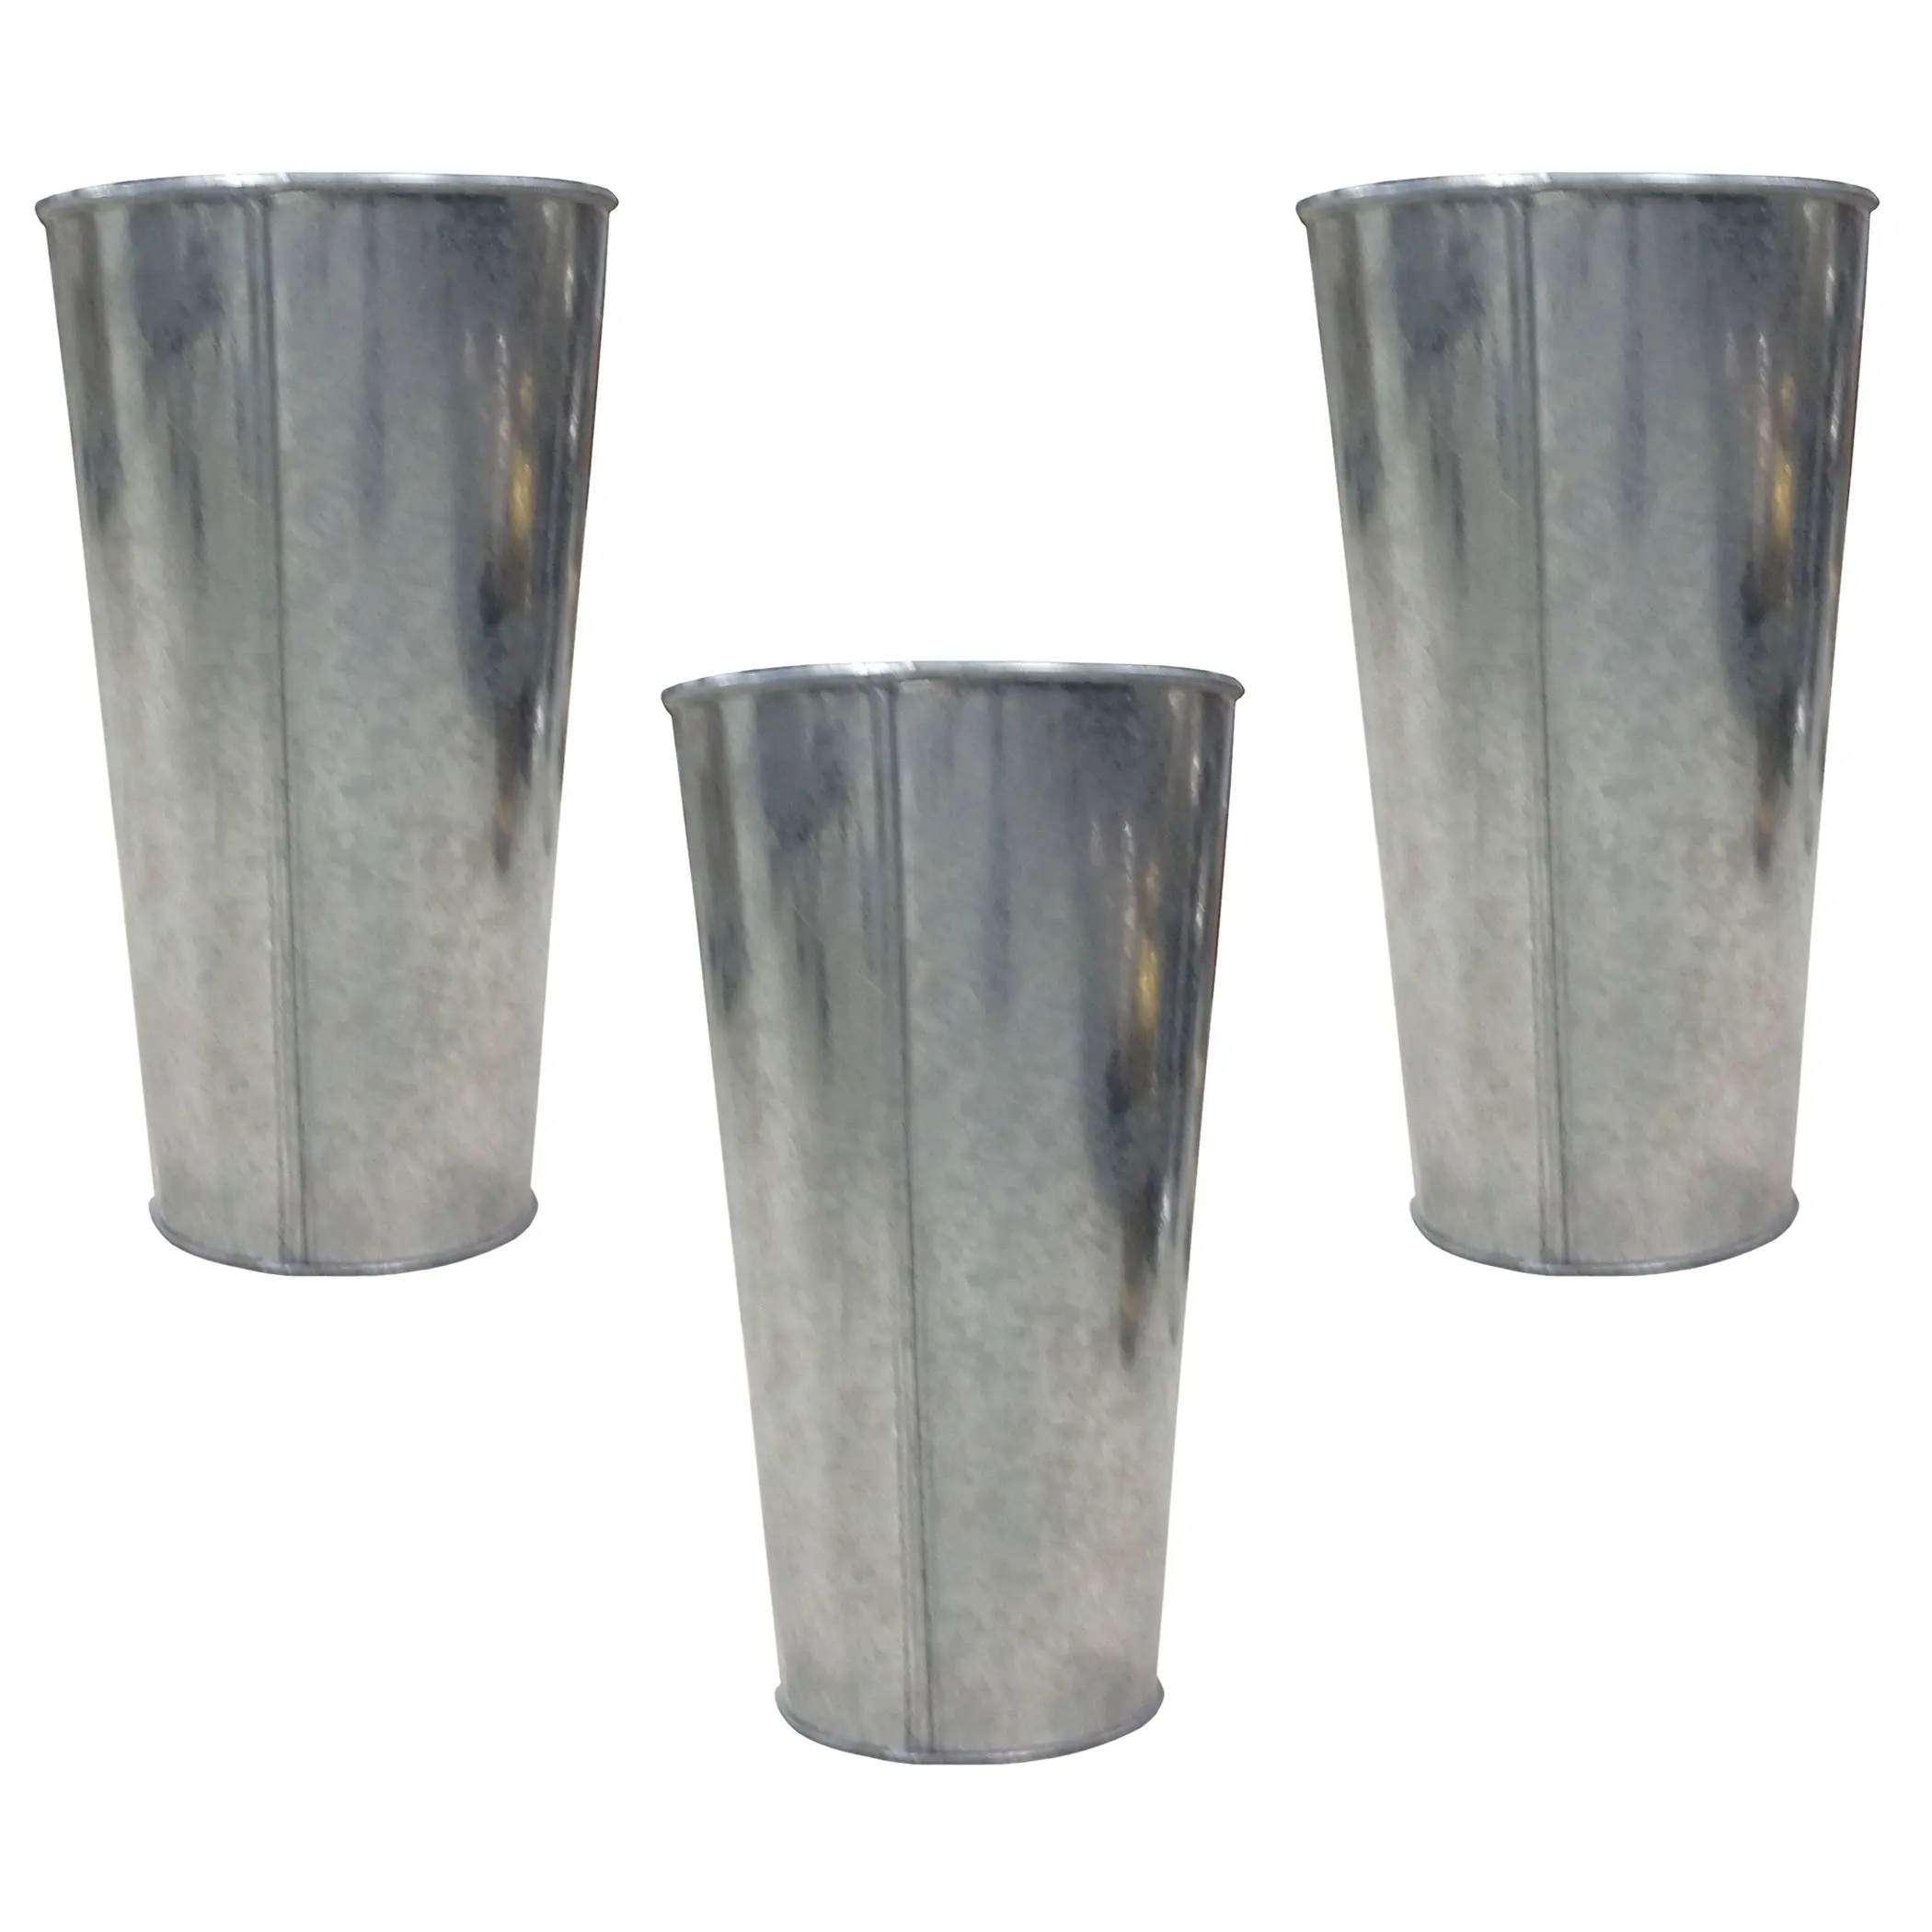 Hosley Set of 3 Galvanized Vases / French Buckets - 9" High. 